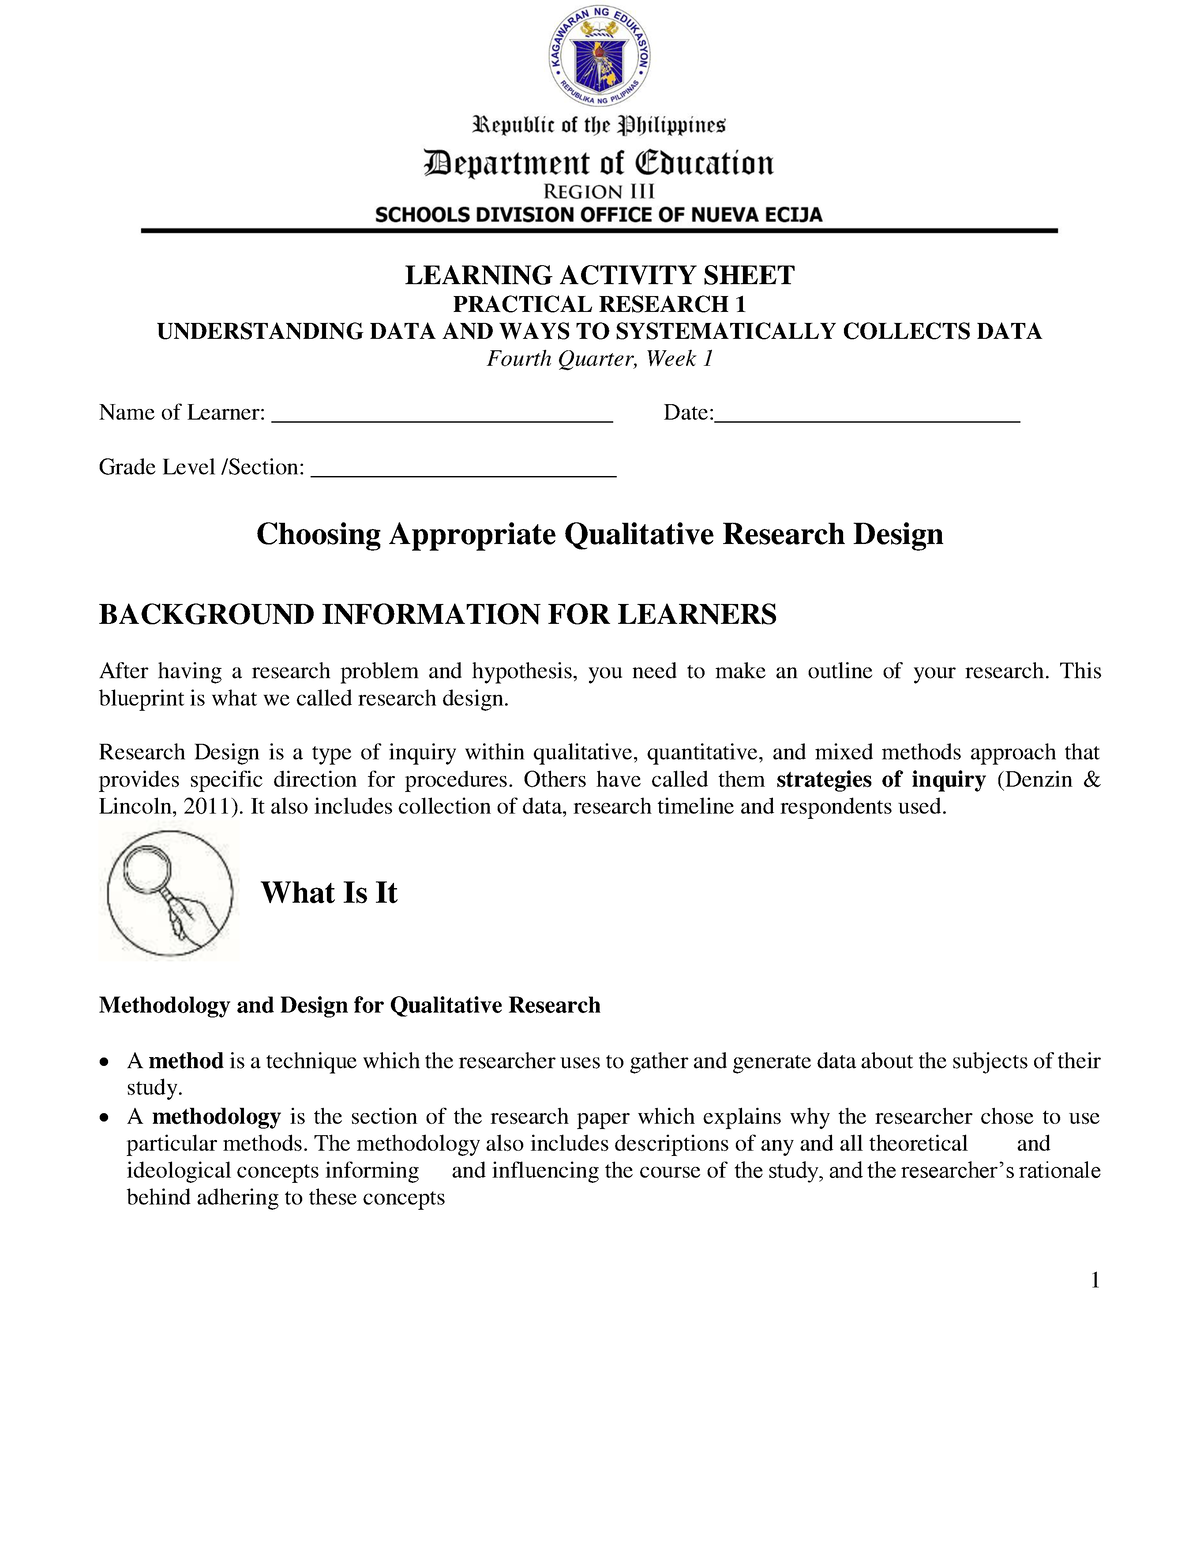 Las Pr1 Q4wk 1 Hvv Choosing Appropriate Qualitative Research Design Learning Activity Sheet 2373